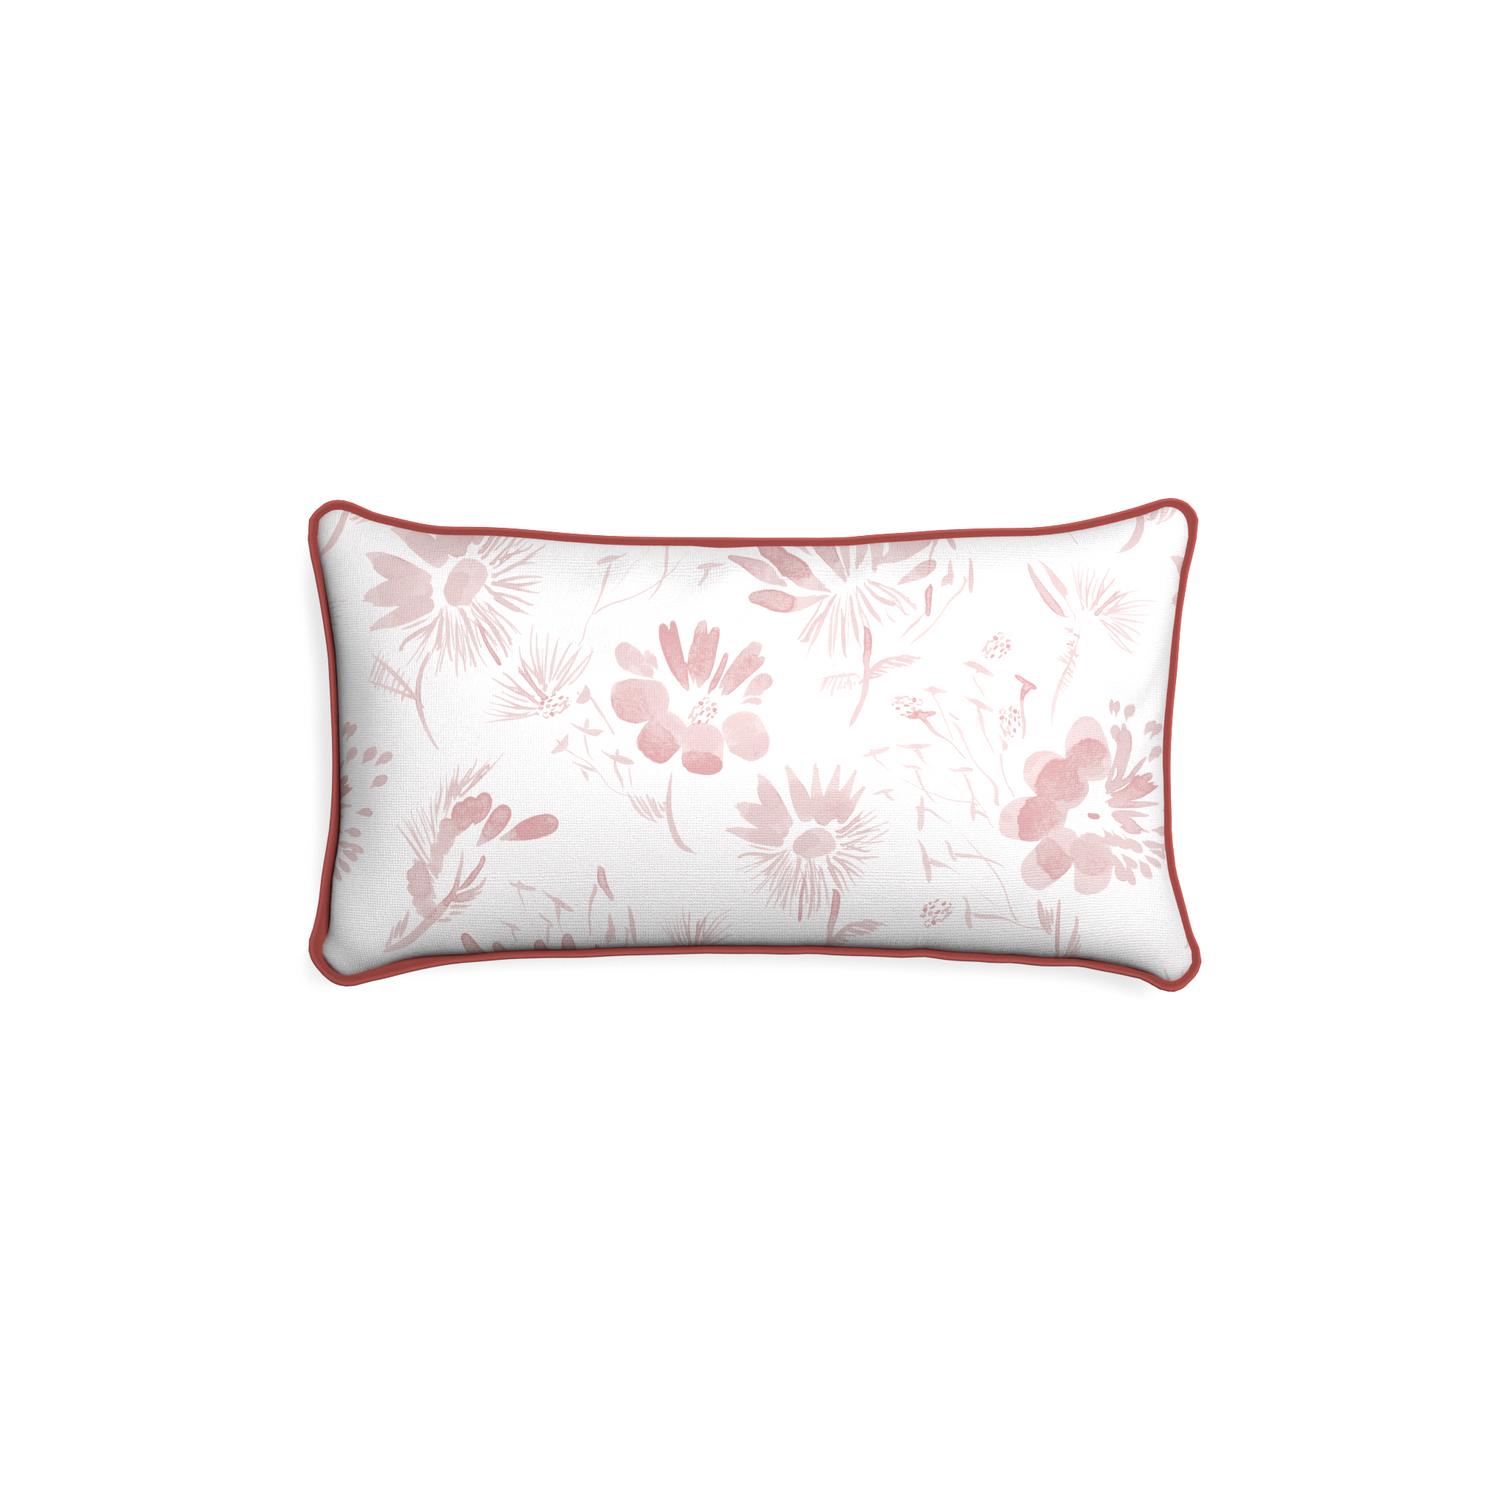 Petite-lumbar blake custom pink floralpillow with c piping on white background